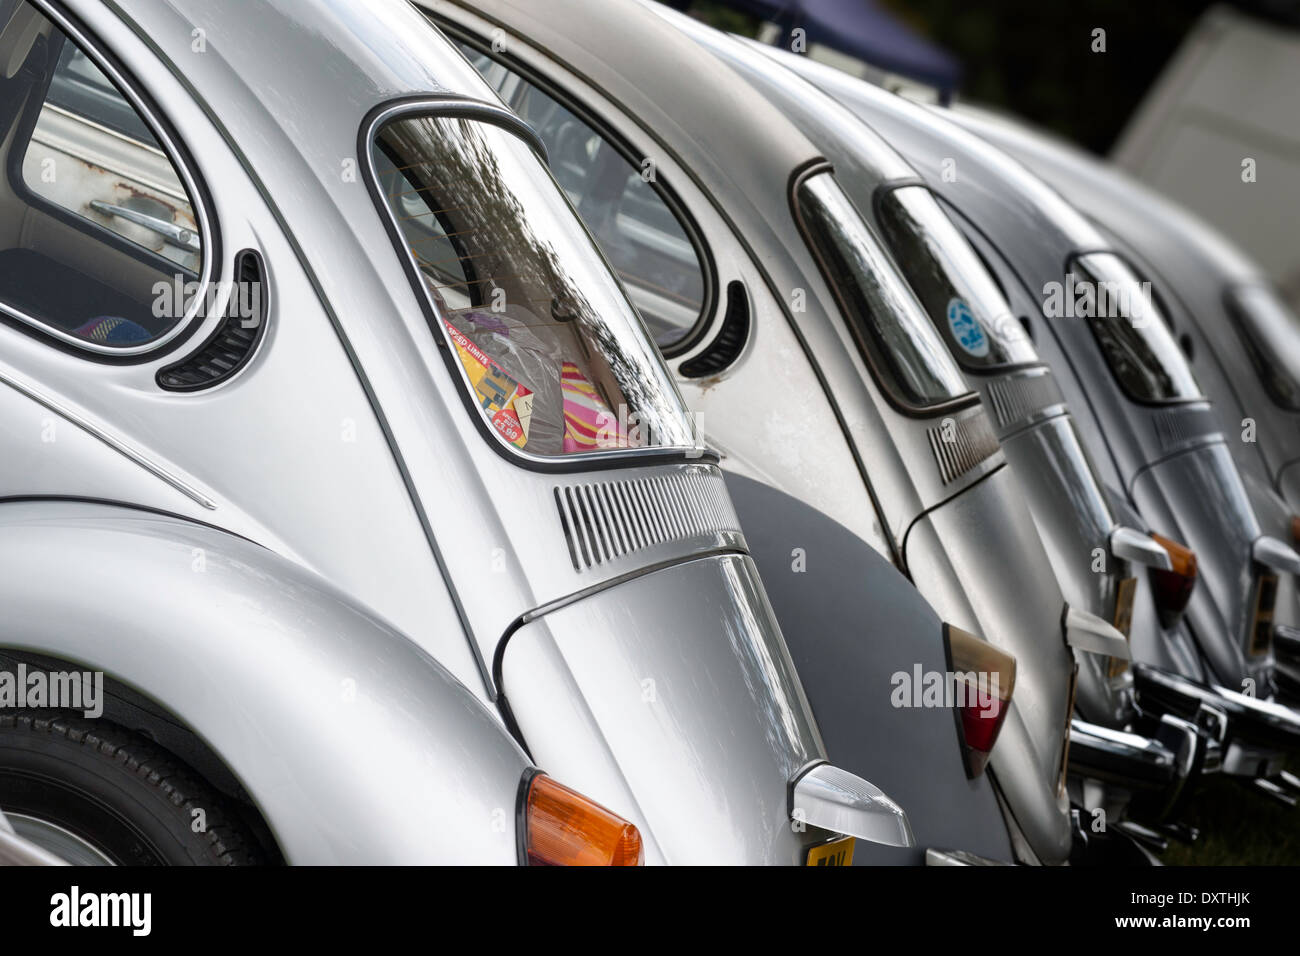 Silver Volkswagen Beetle engine bays. Stock Photo